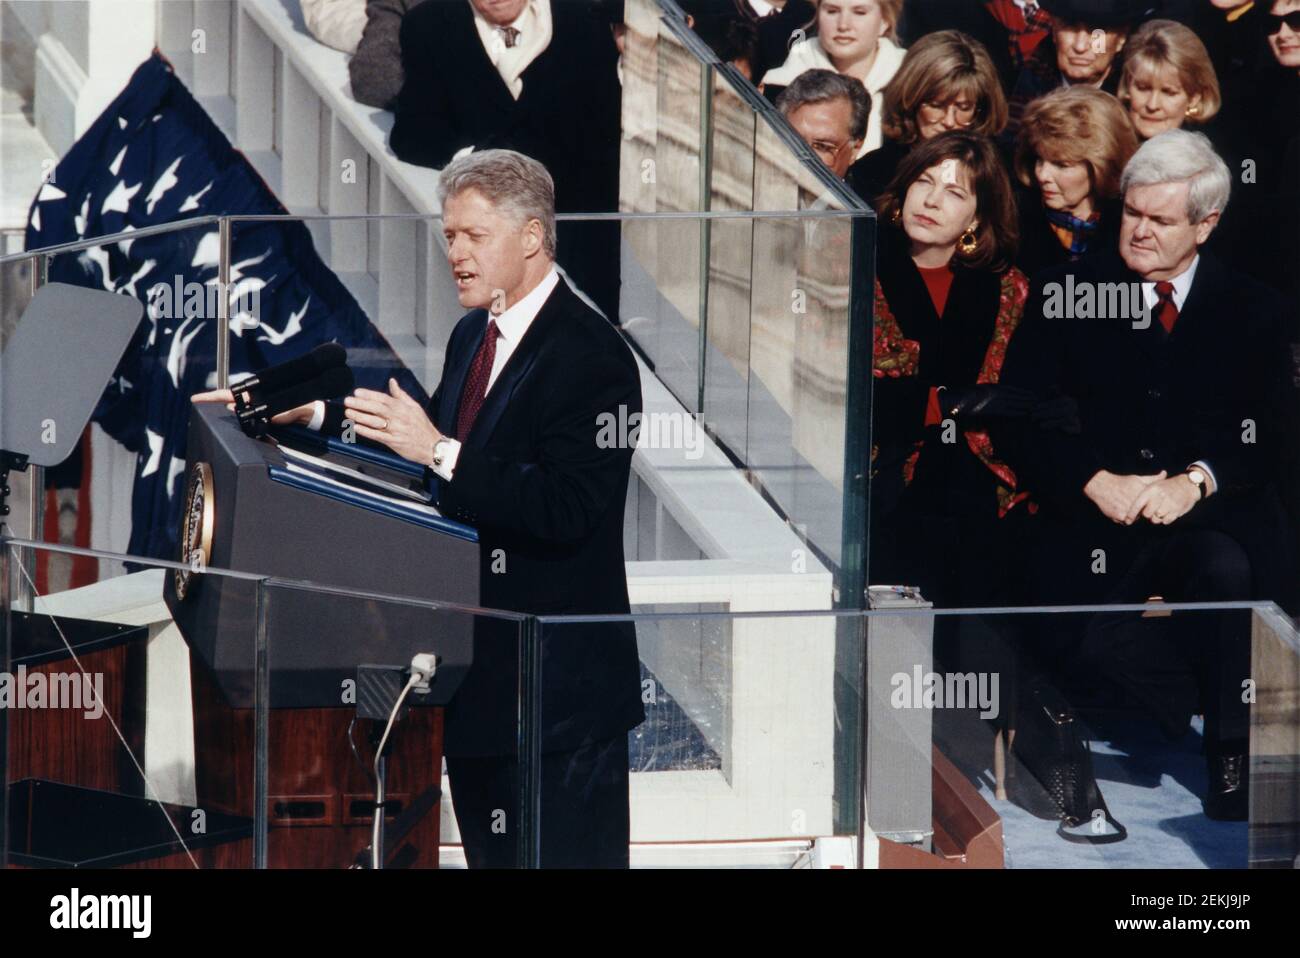 42nd US President BILL CLINTON Glossy 8x10 Photo 1997 Inauguration Poster Print 